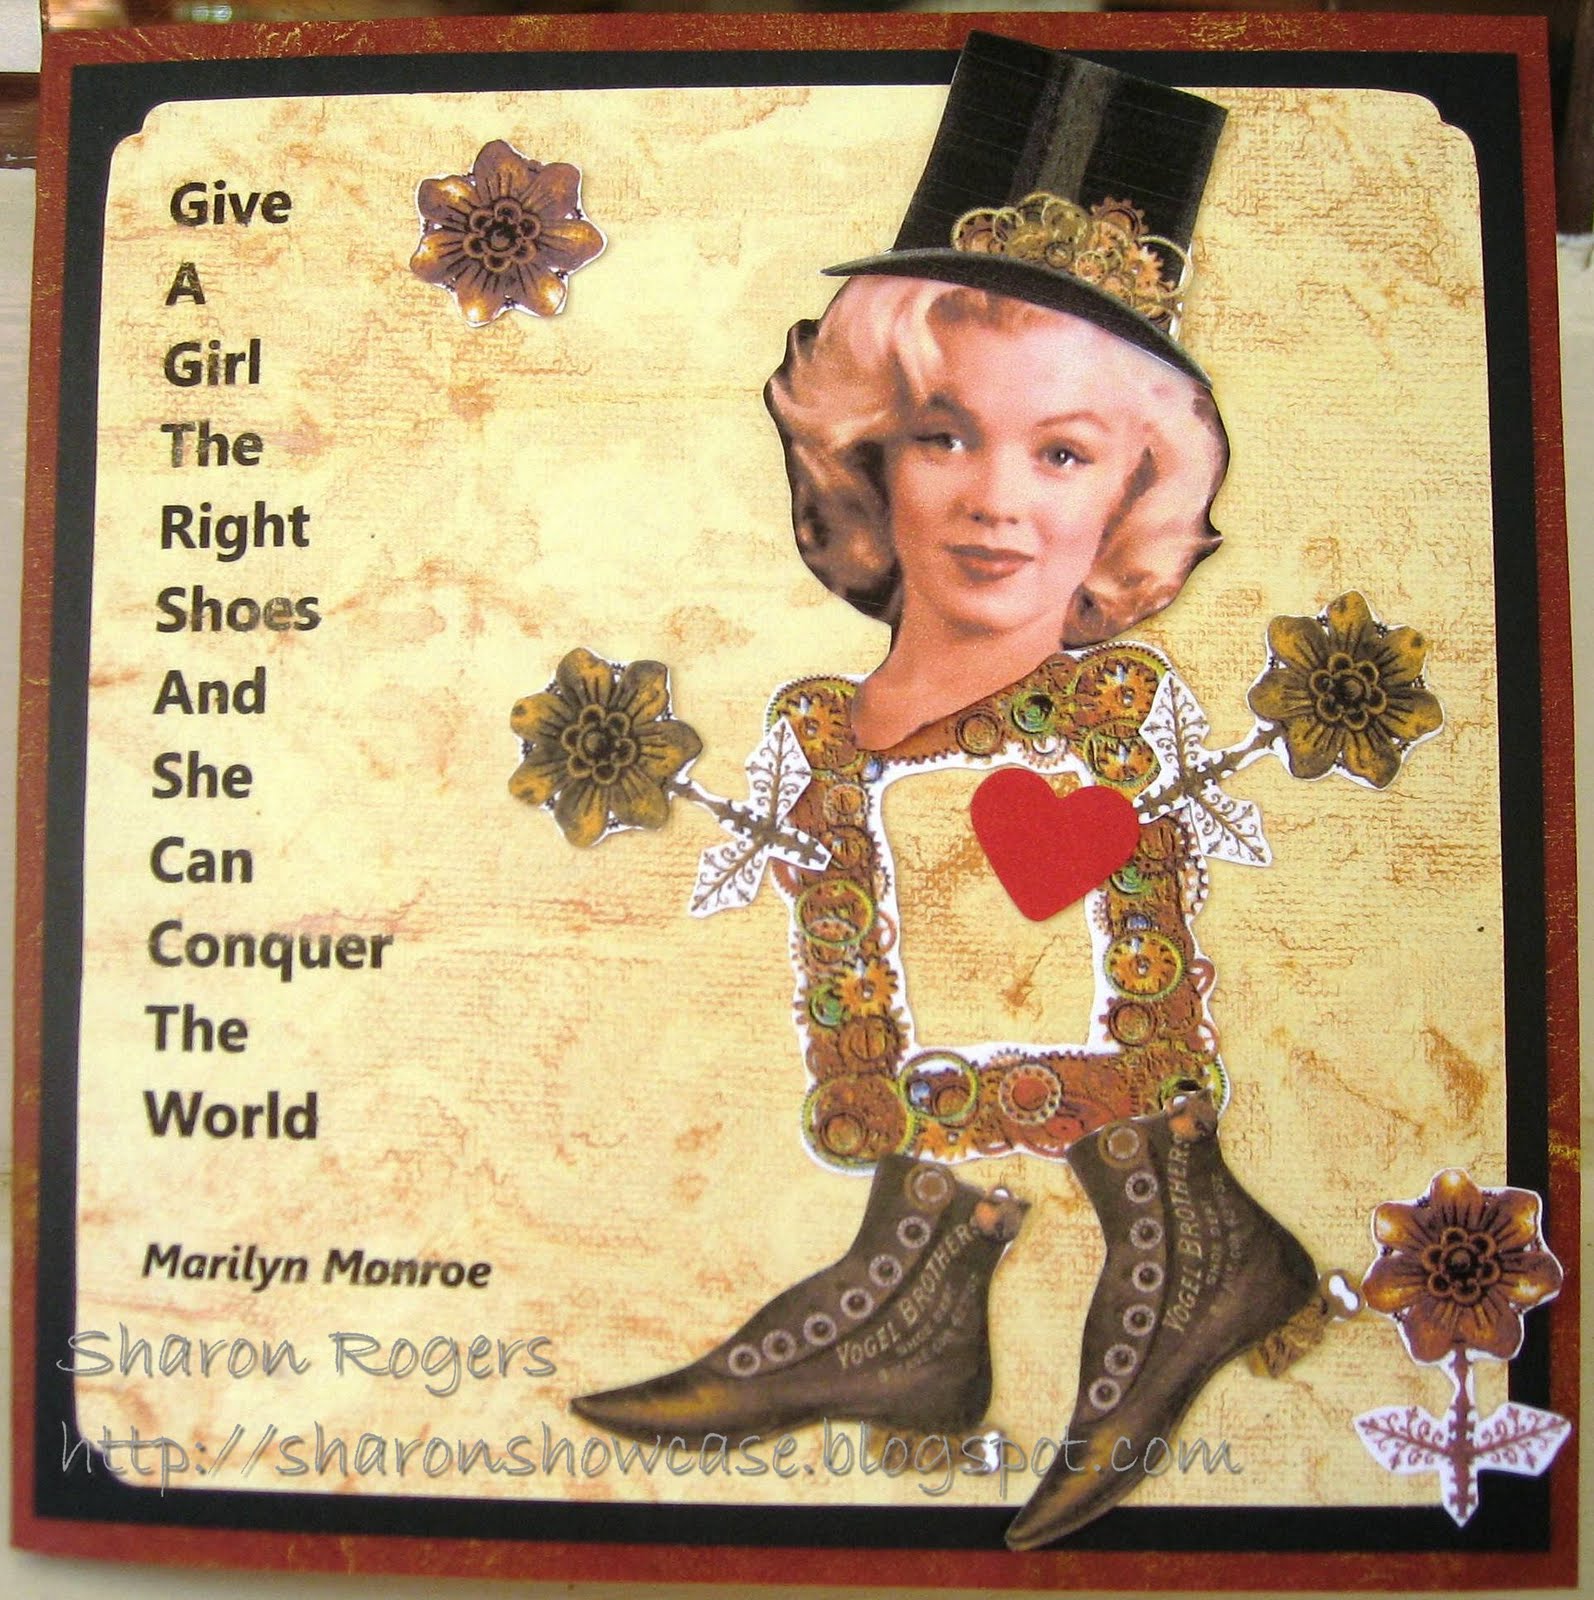 http://4.bp.blogspot.com/-Yy_s-PNRCYM/TeWQYVphWWI/AAAAAAAAAhc/BIYo79ObVLk/s1600/Marilyn+Monroe+Card+001.jpg